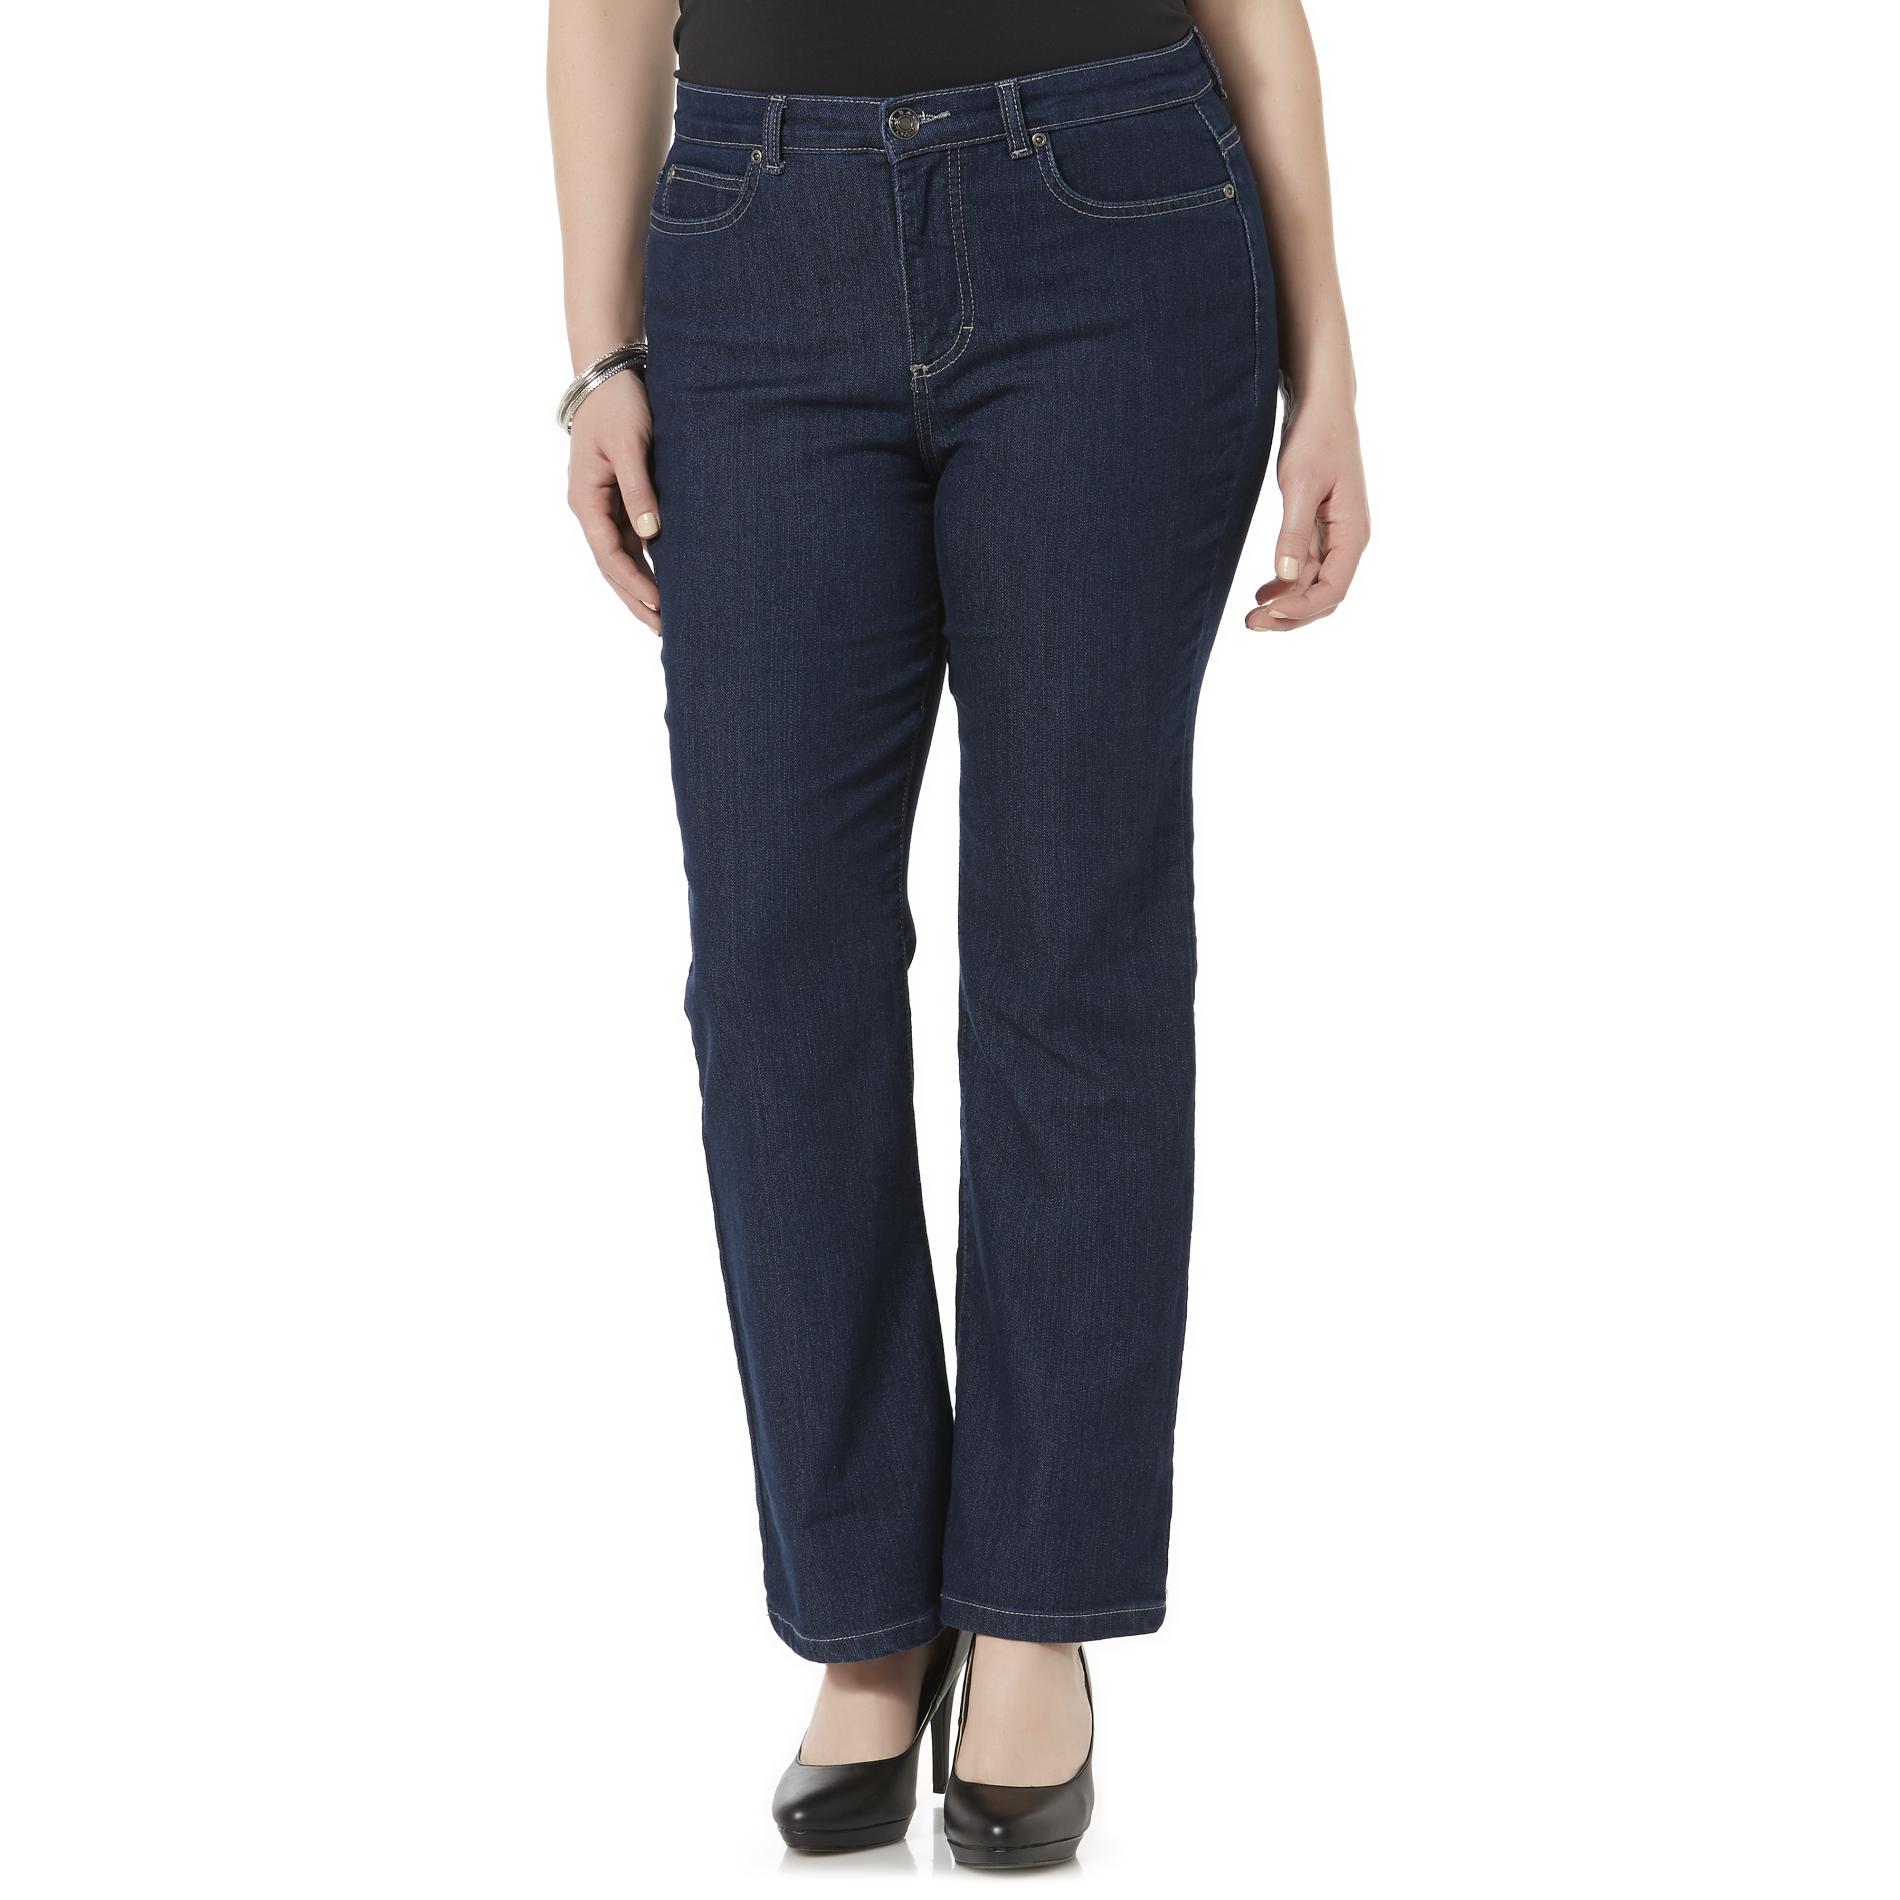 Basic Editions Women's Modern Bootcut Jeans